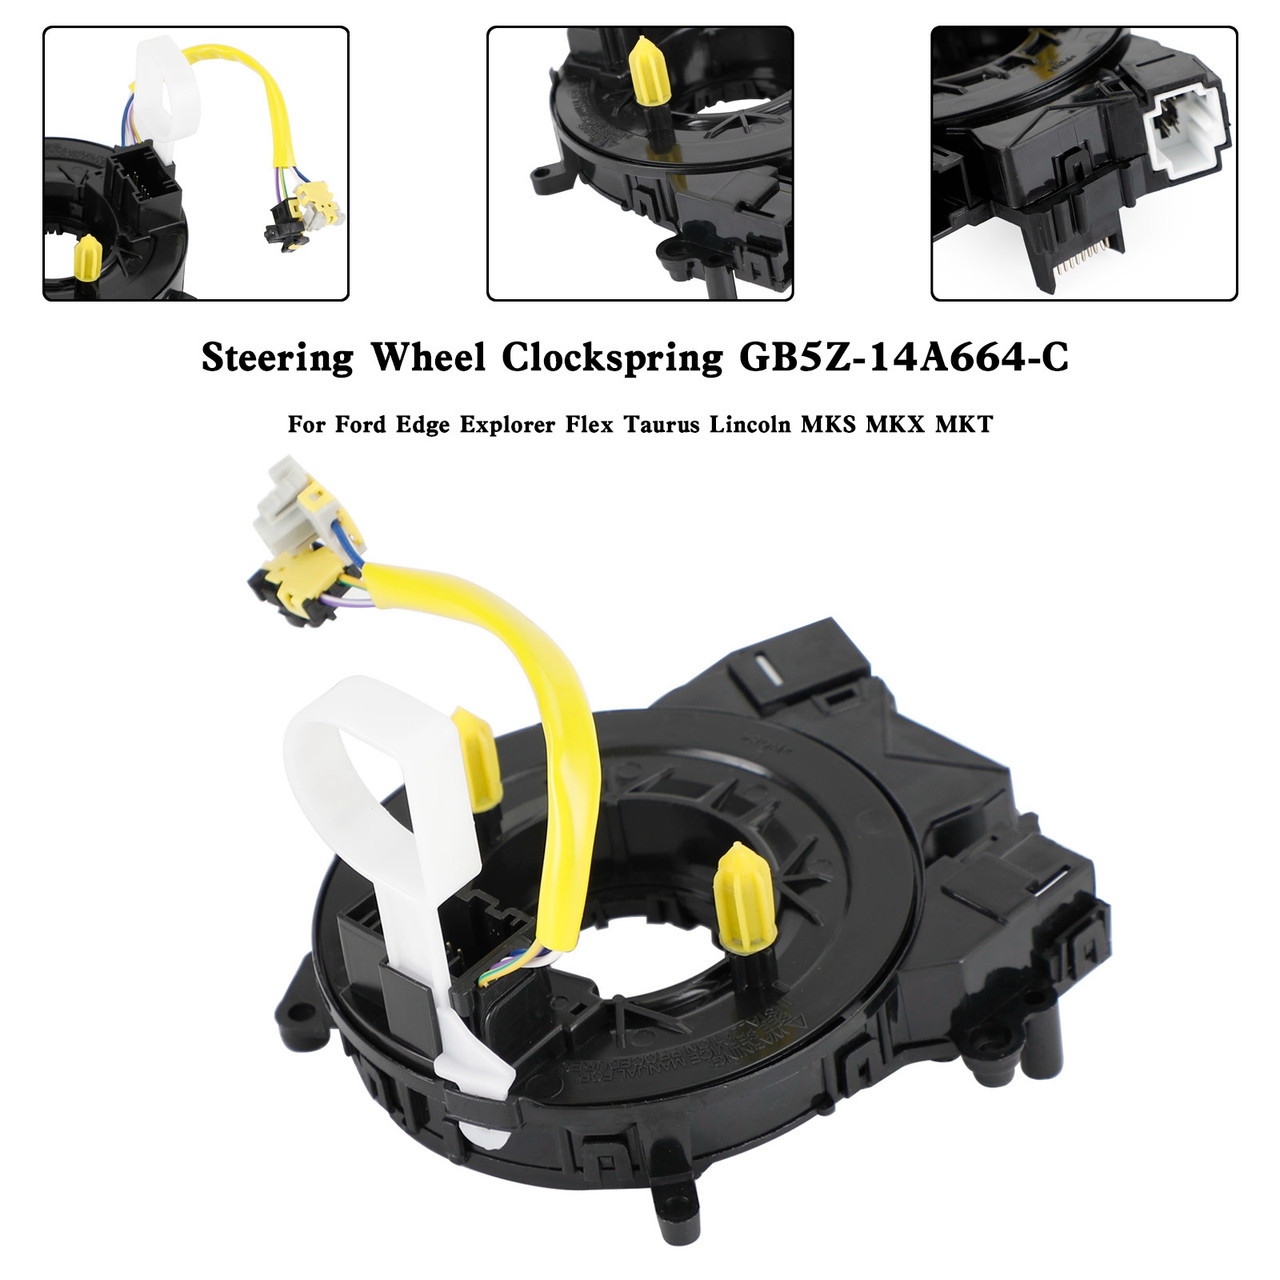 Steering Wheel Clockspring GB5Z-14A664-C For Ford Edge Explorer Flex